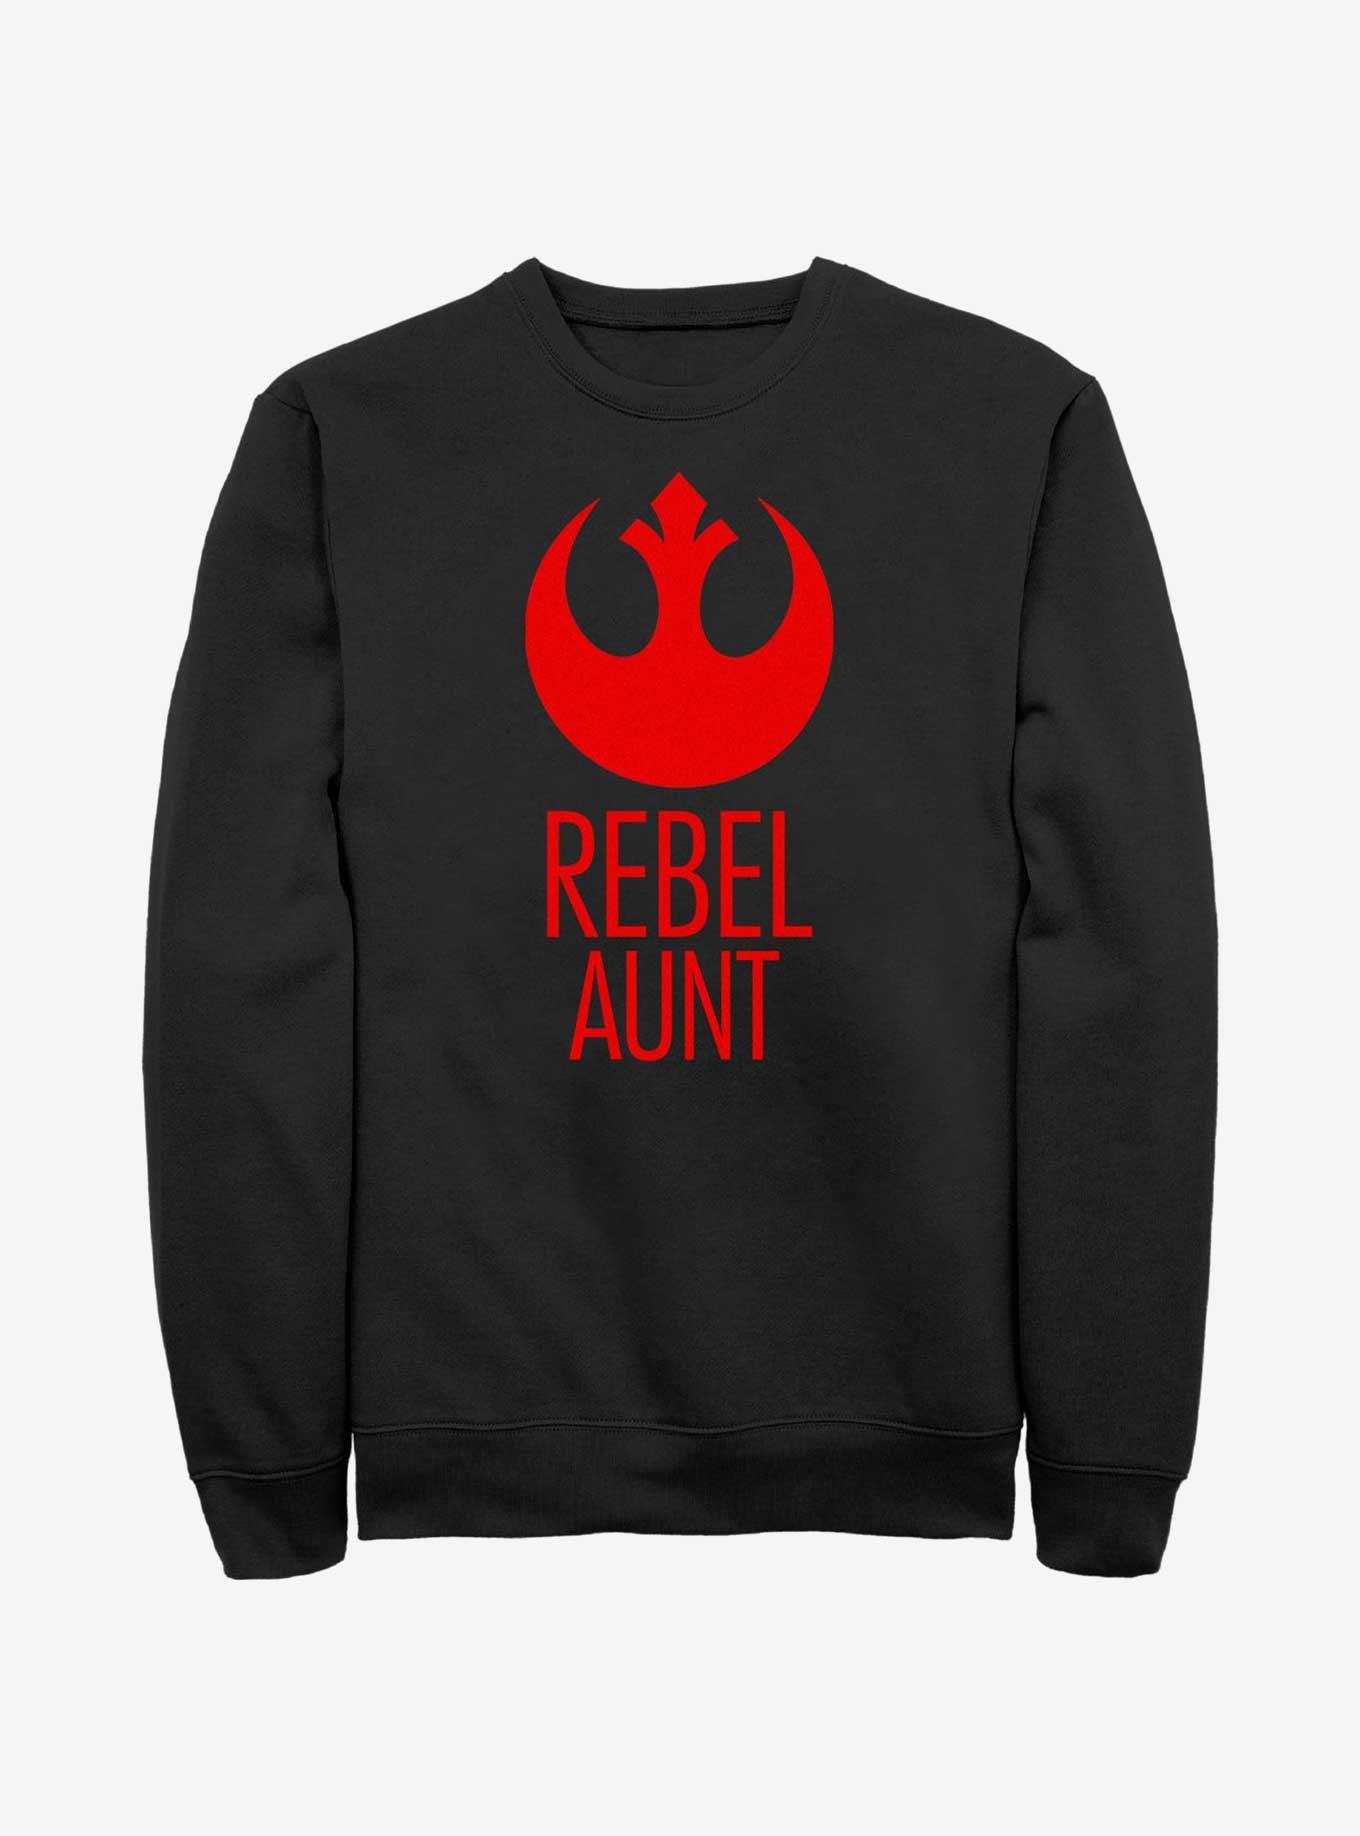 Star Wars Rebel Aunt Sweatshirt